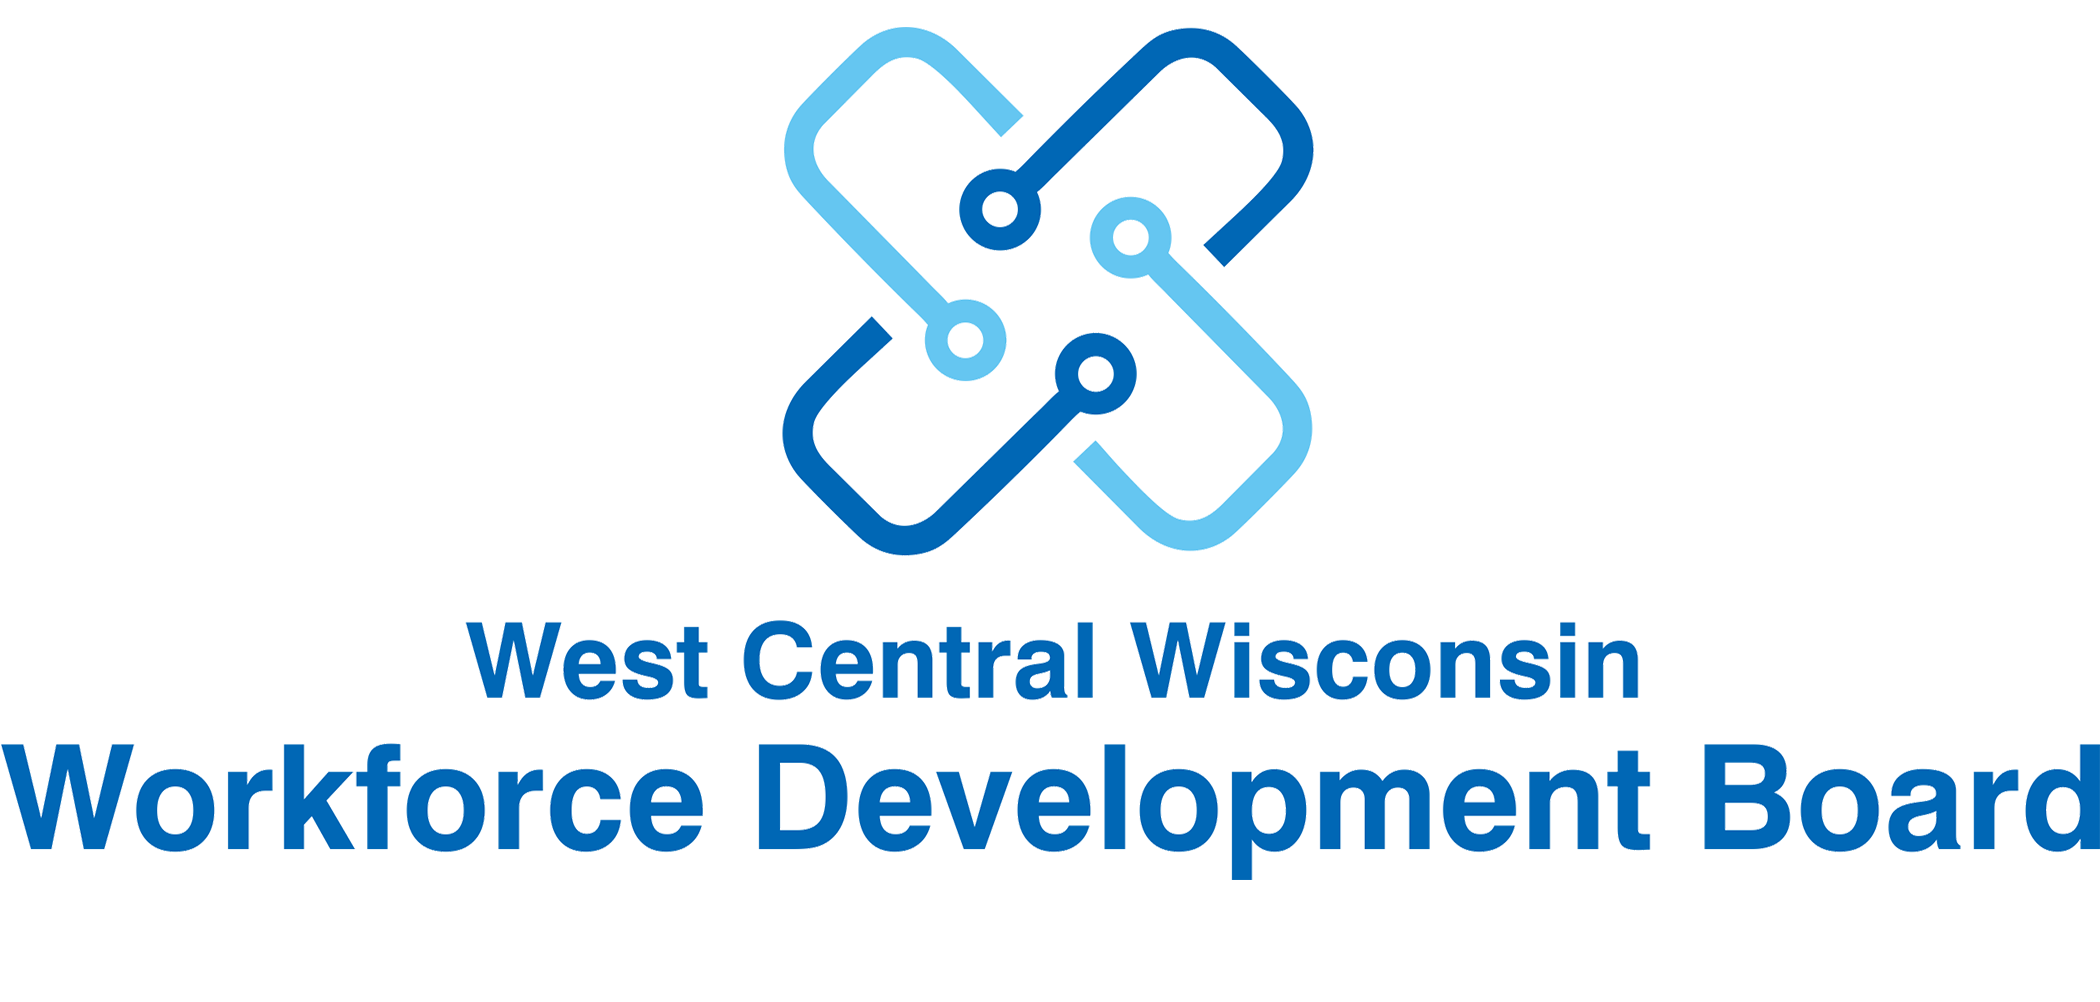 West Central Wisconsin Workforce Development Board logo